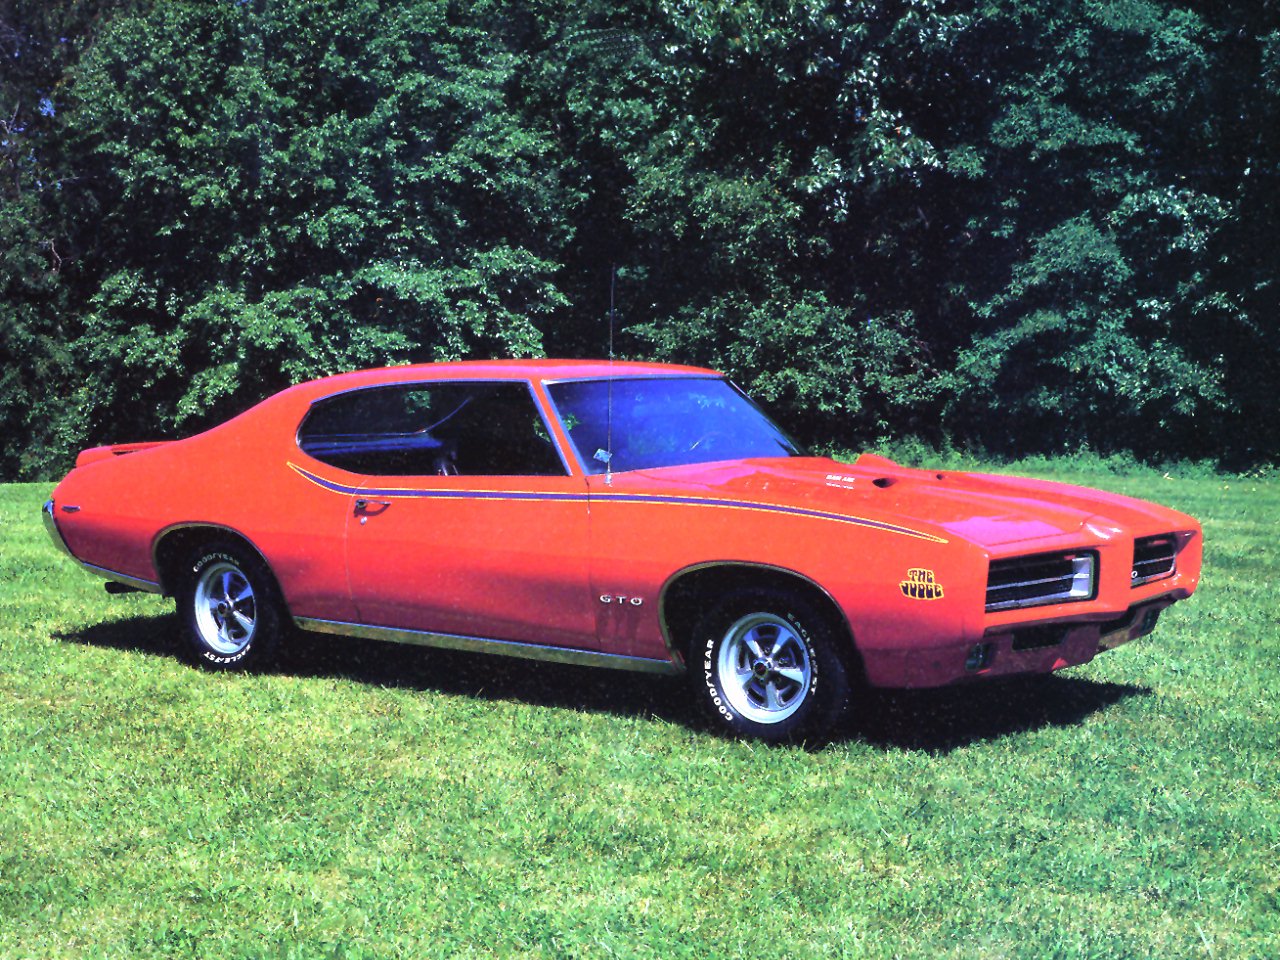 1969 Pontiac Gto The Judge Orange Fvr - 1969 Pontiac Gto Judge Orange - HD Wallpaper 